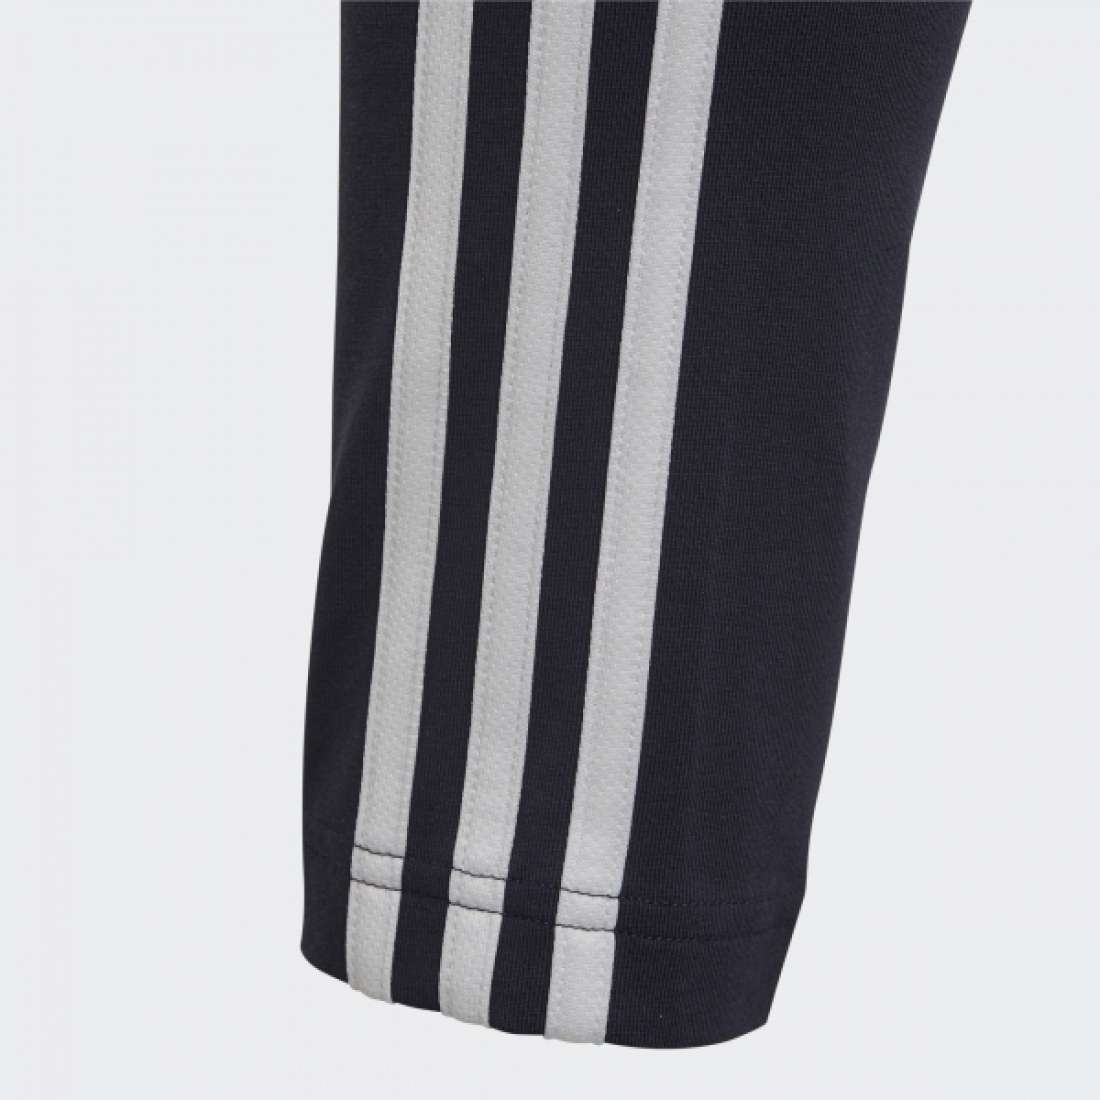 Grupo Lpoint® - Leggings Adidas Essentials 3-stripes K Black/white